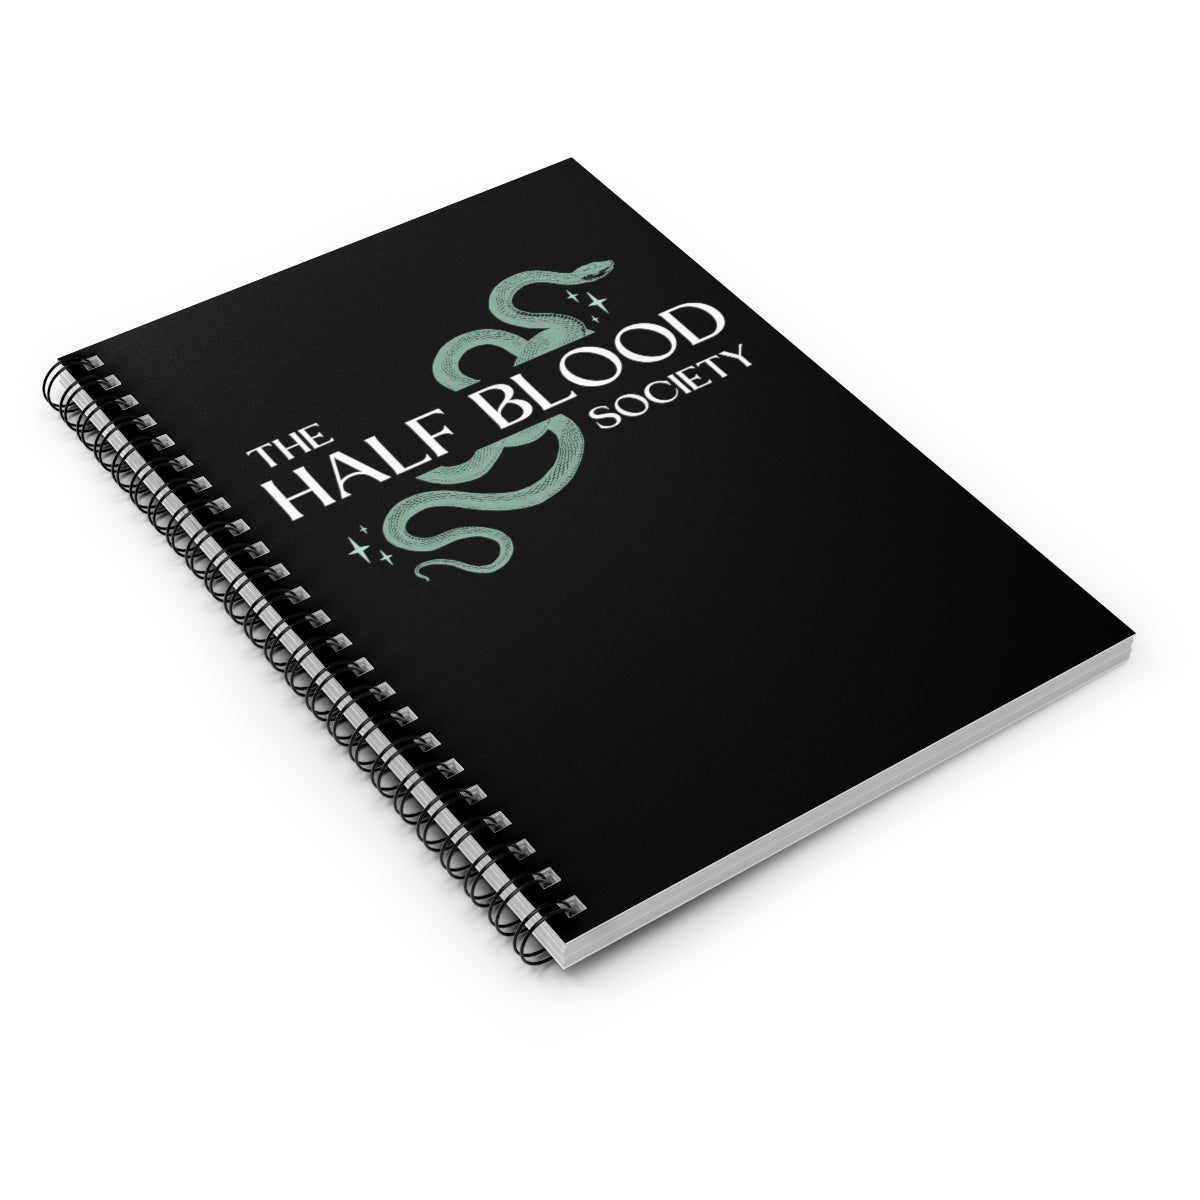 Half Blood Society Spiral Notebook